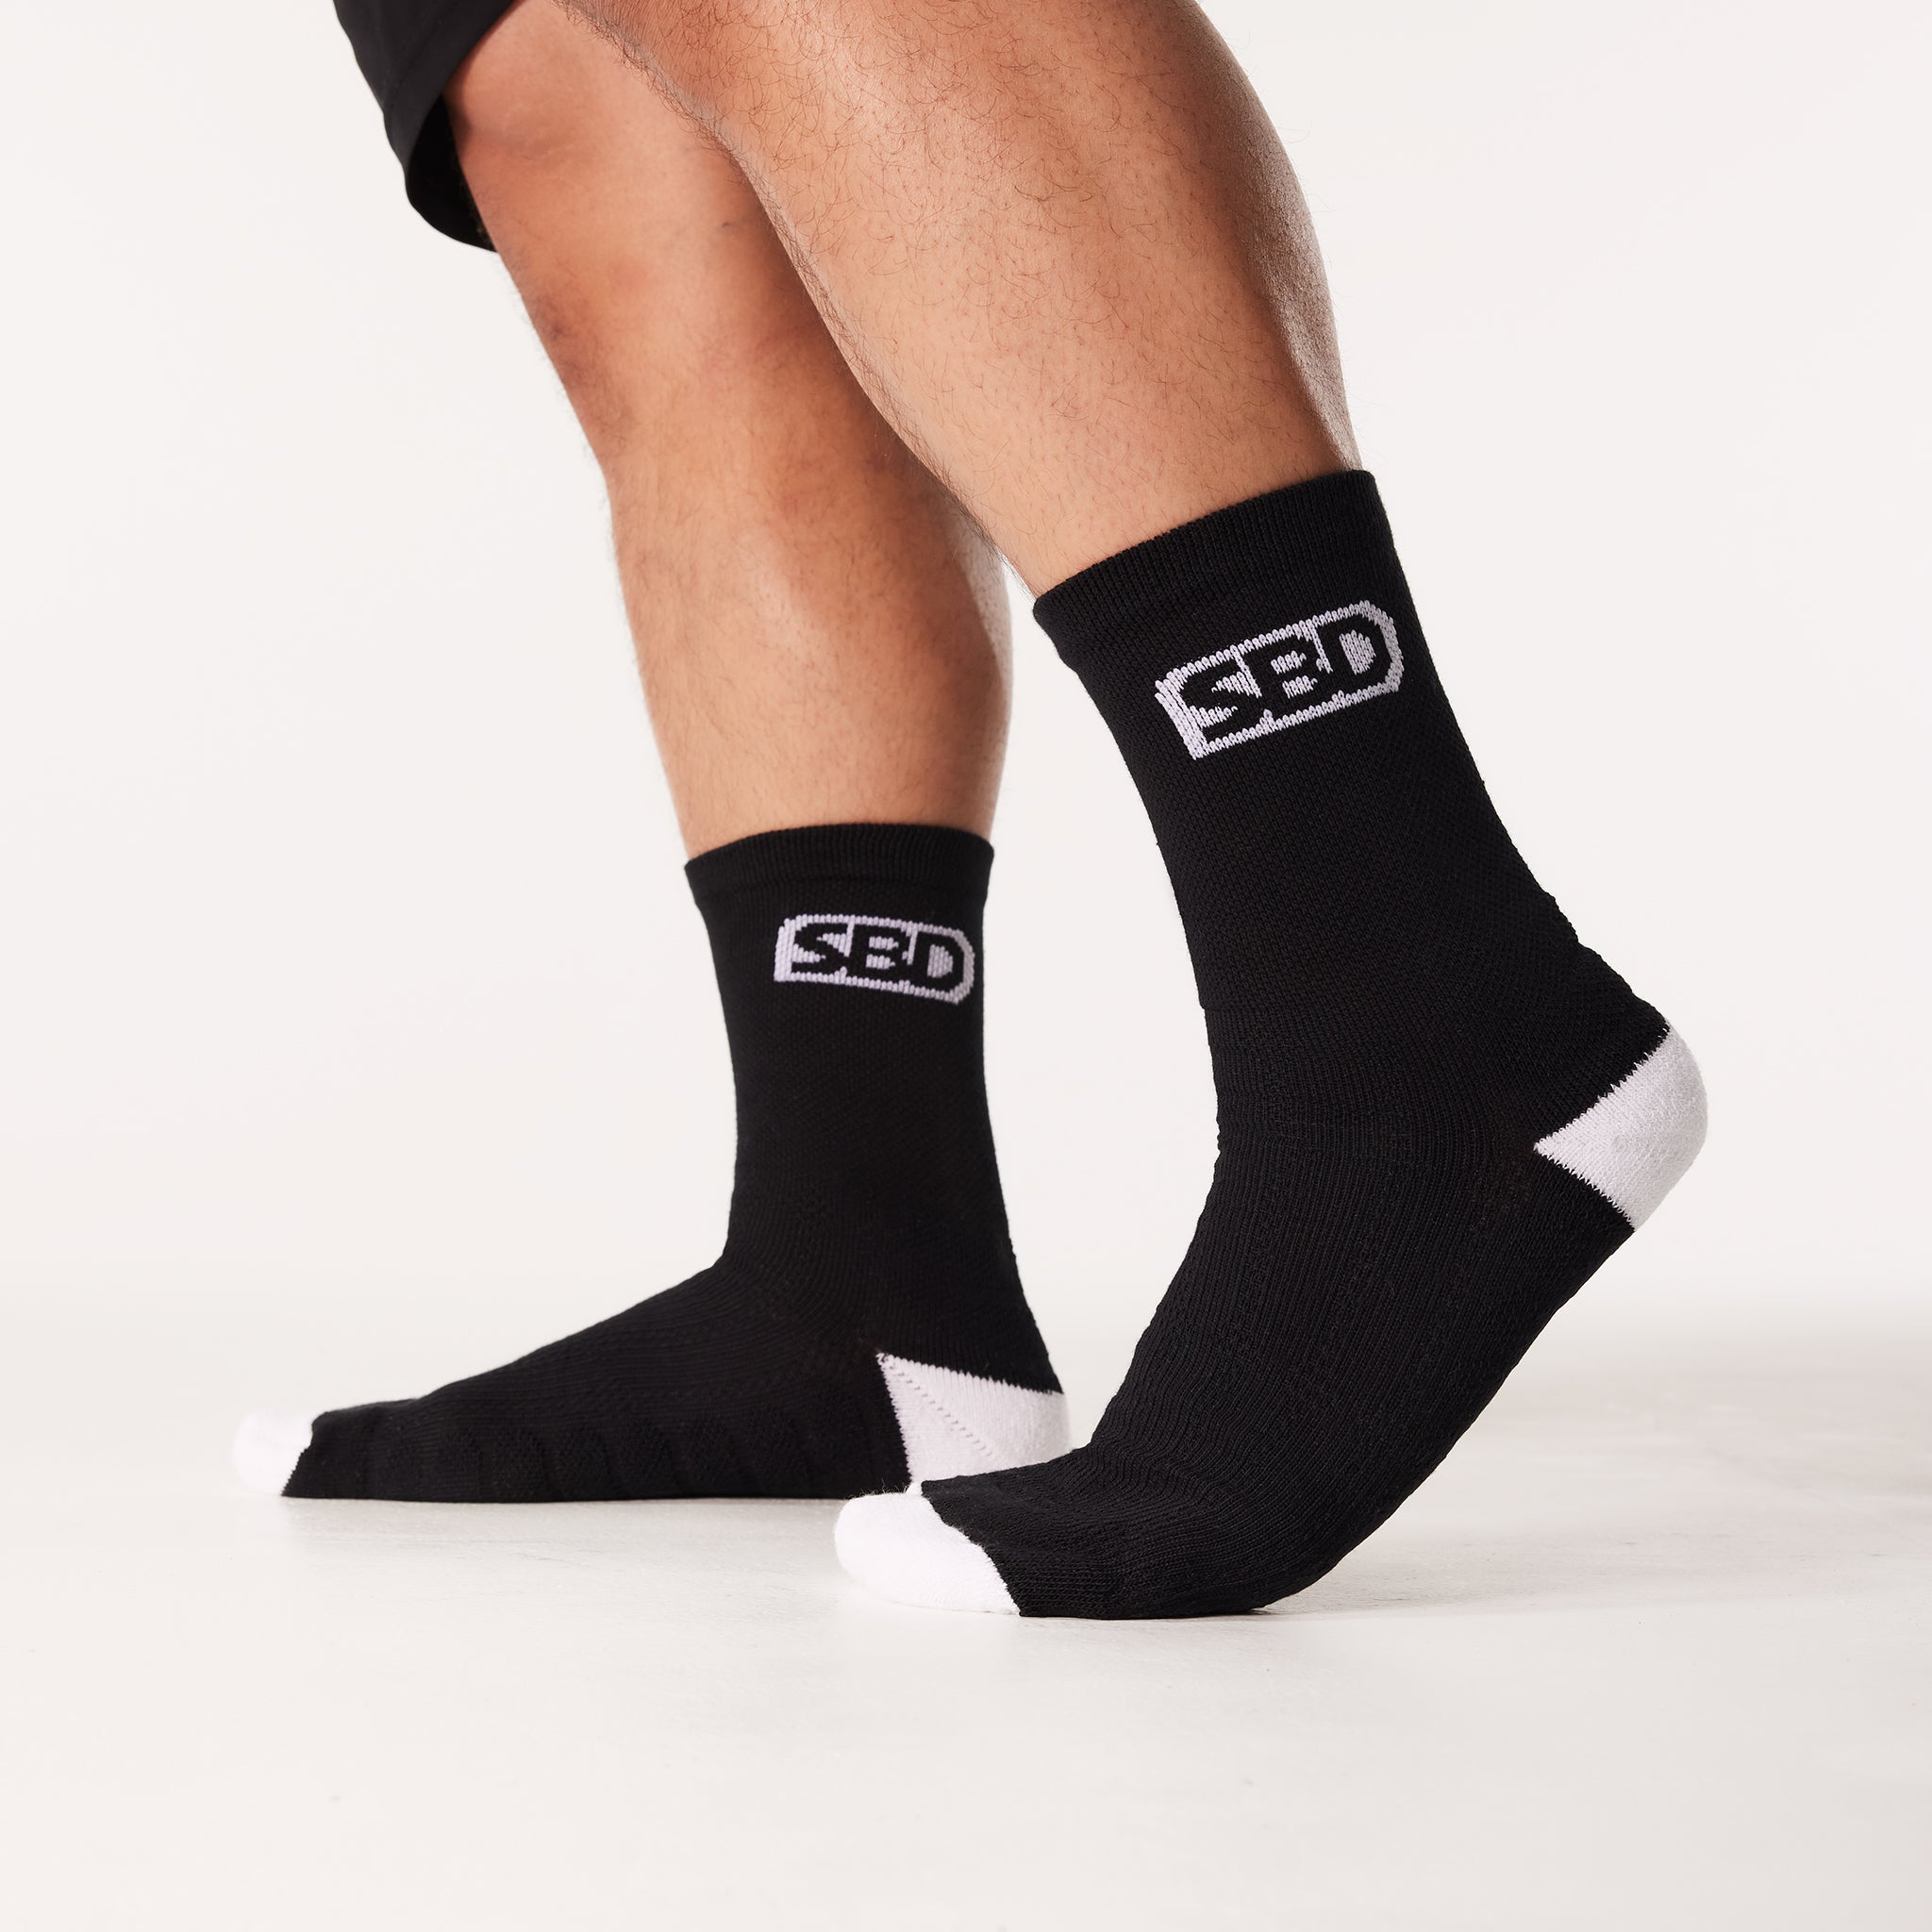 SBD Sport socks Momentum Limited Edition